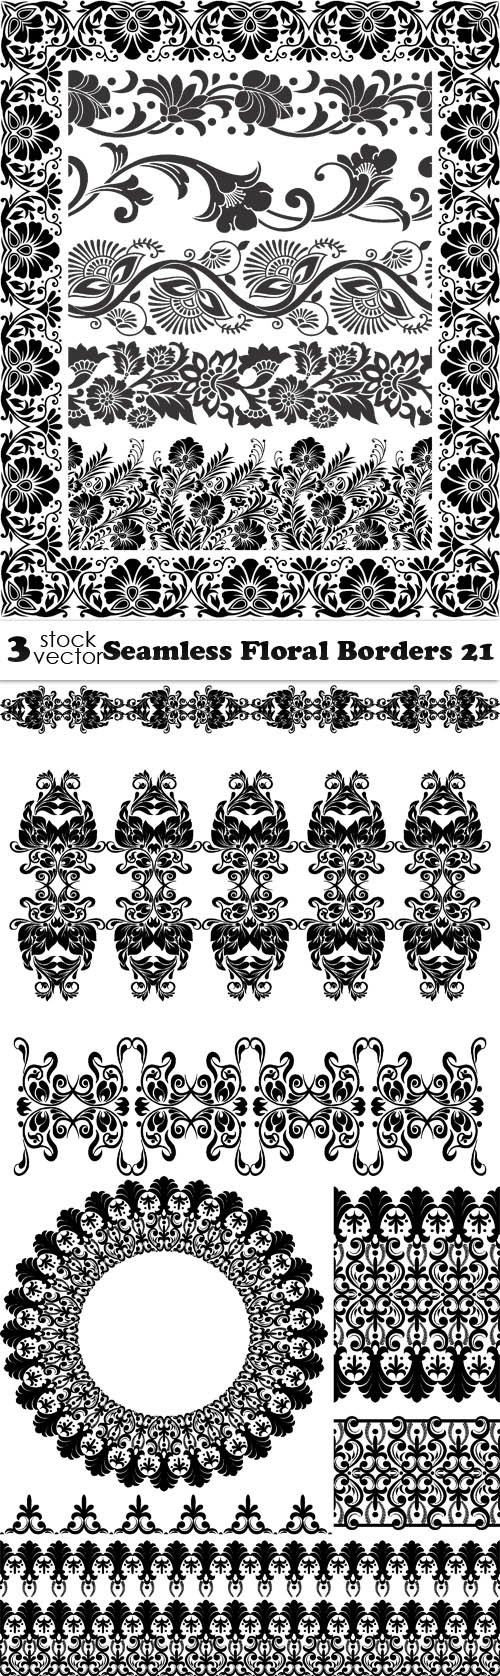 Vectors - Seamless Floral Borders 21